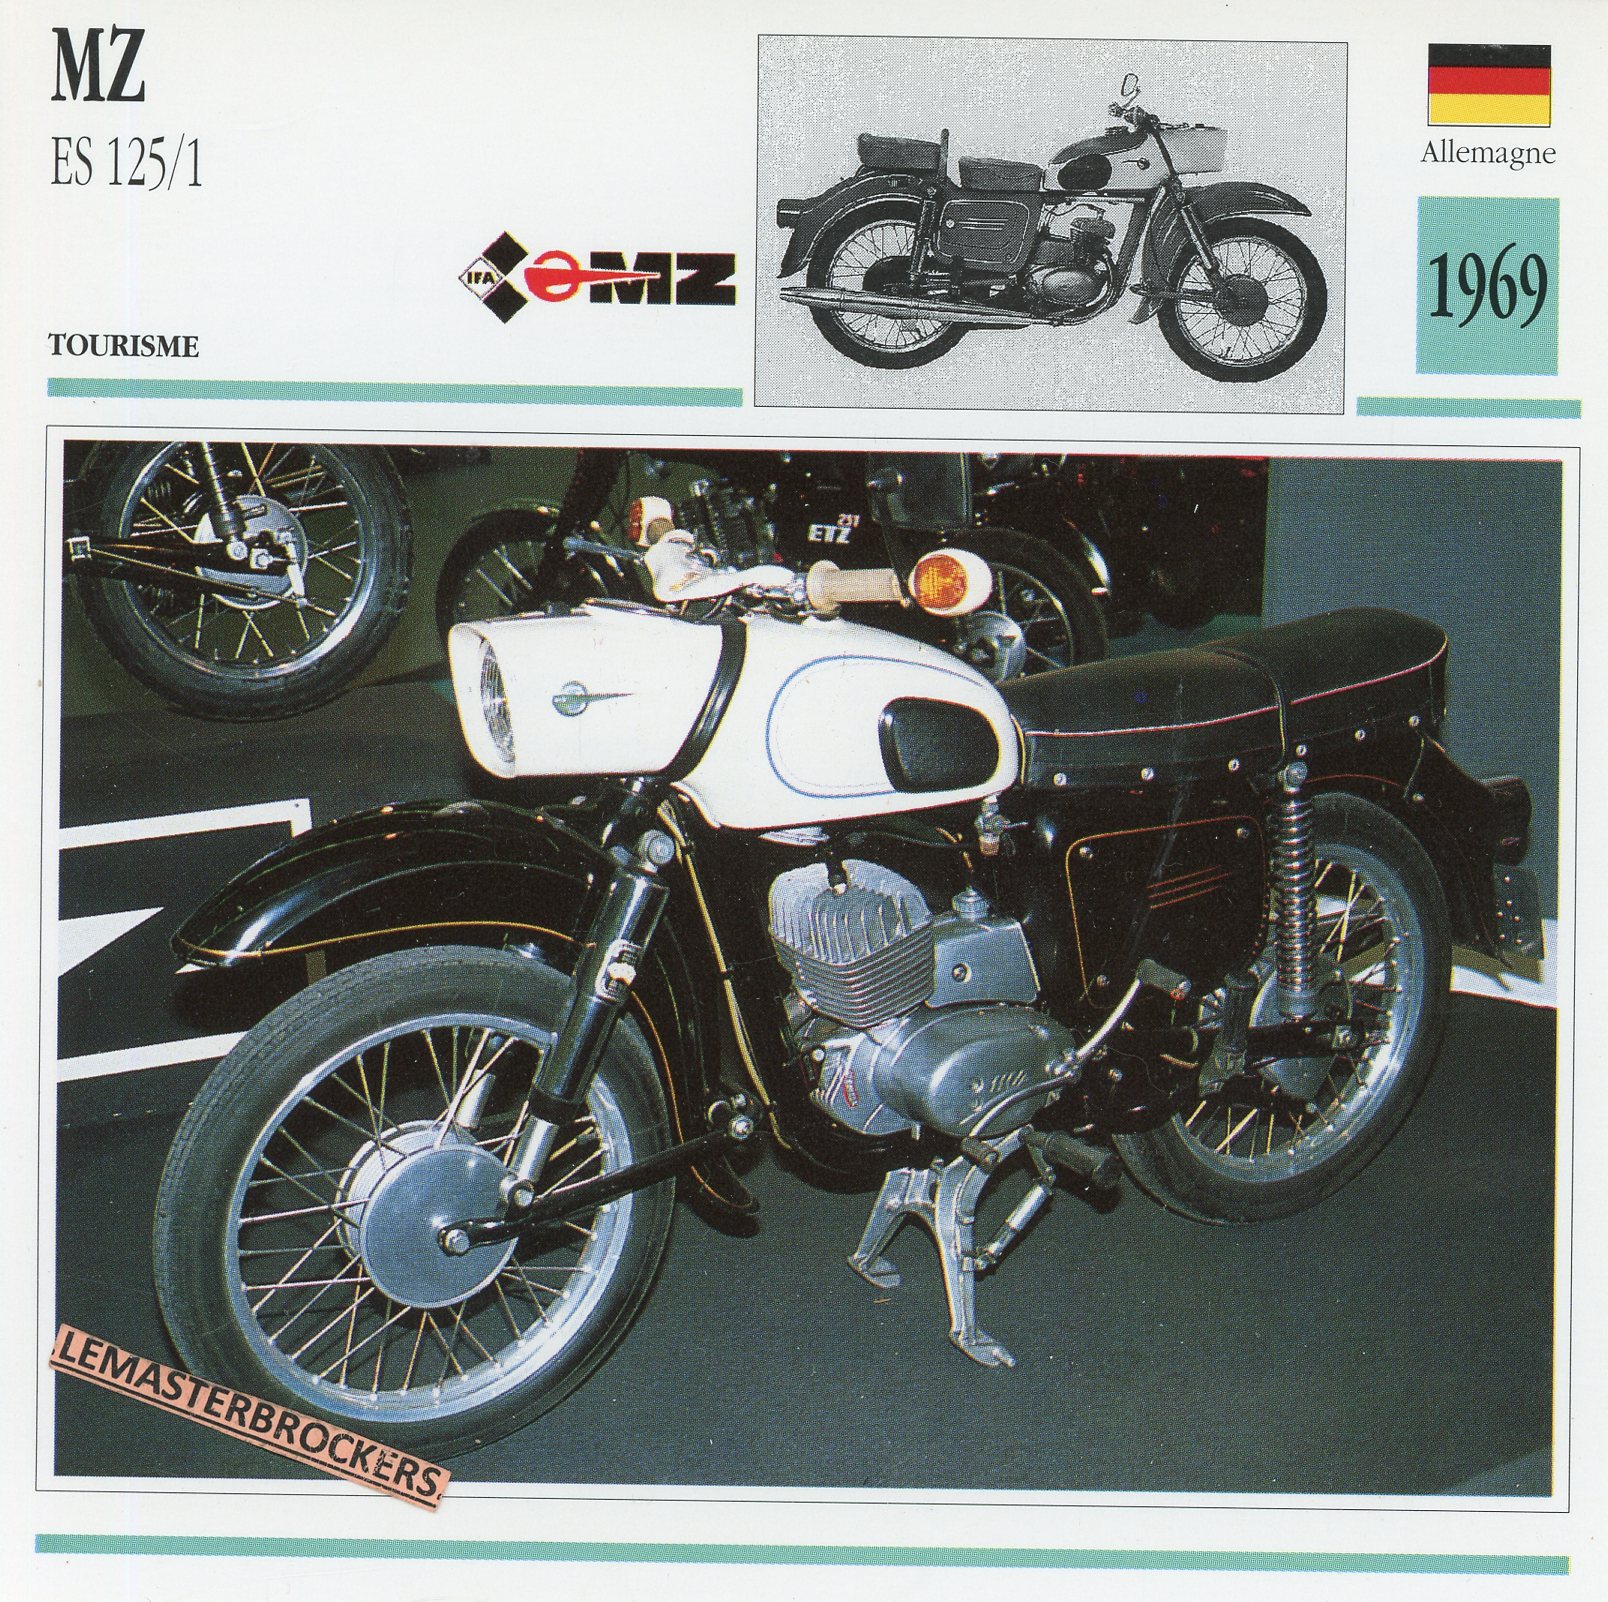 FICHE-MOTO-MZ-ES125-1969-LEMASTERBROCKERS